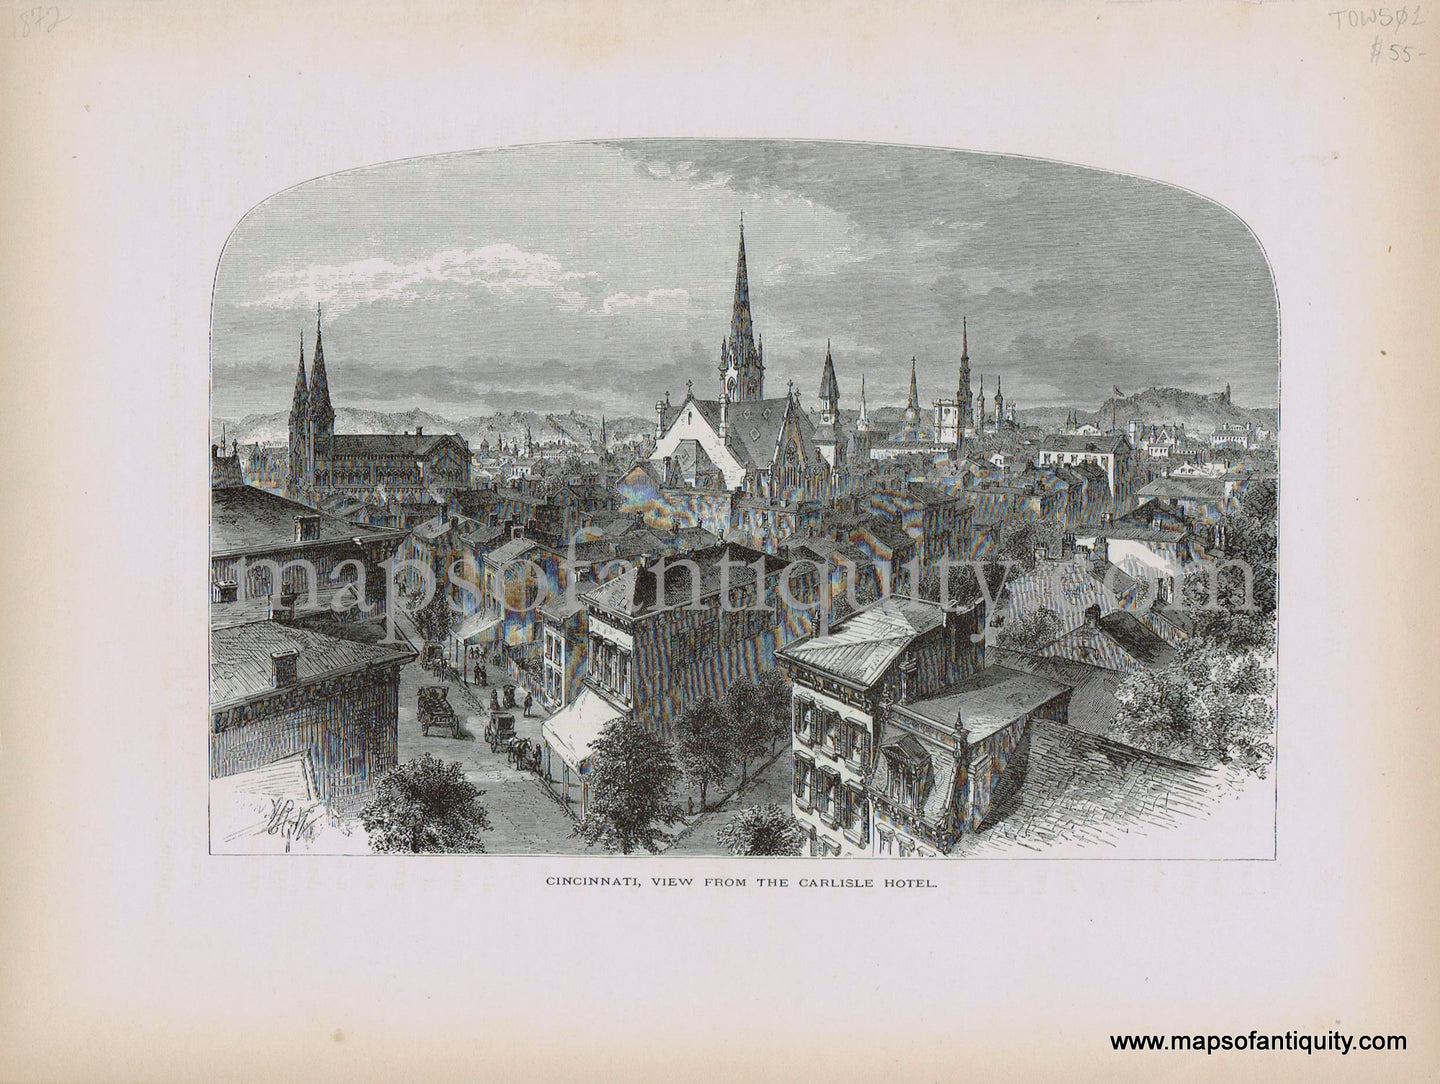 Antique-Print-Prints-Cincinnati-Ohio-View-from-the-Carlisle-Hotel-1872-Picturesque-America-1800s-19th-century-maps-of-Antiquity